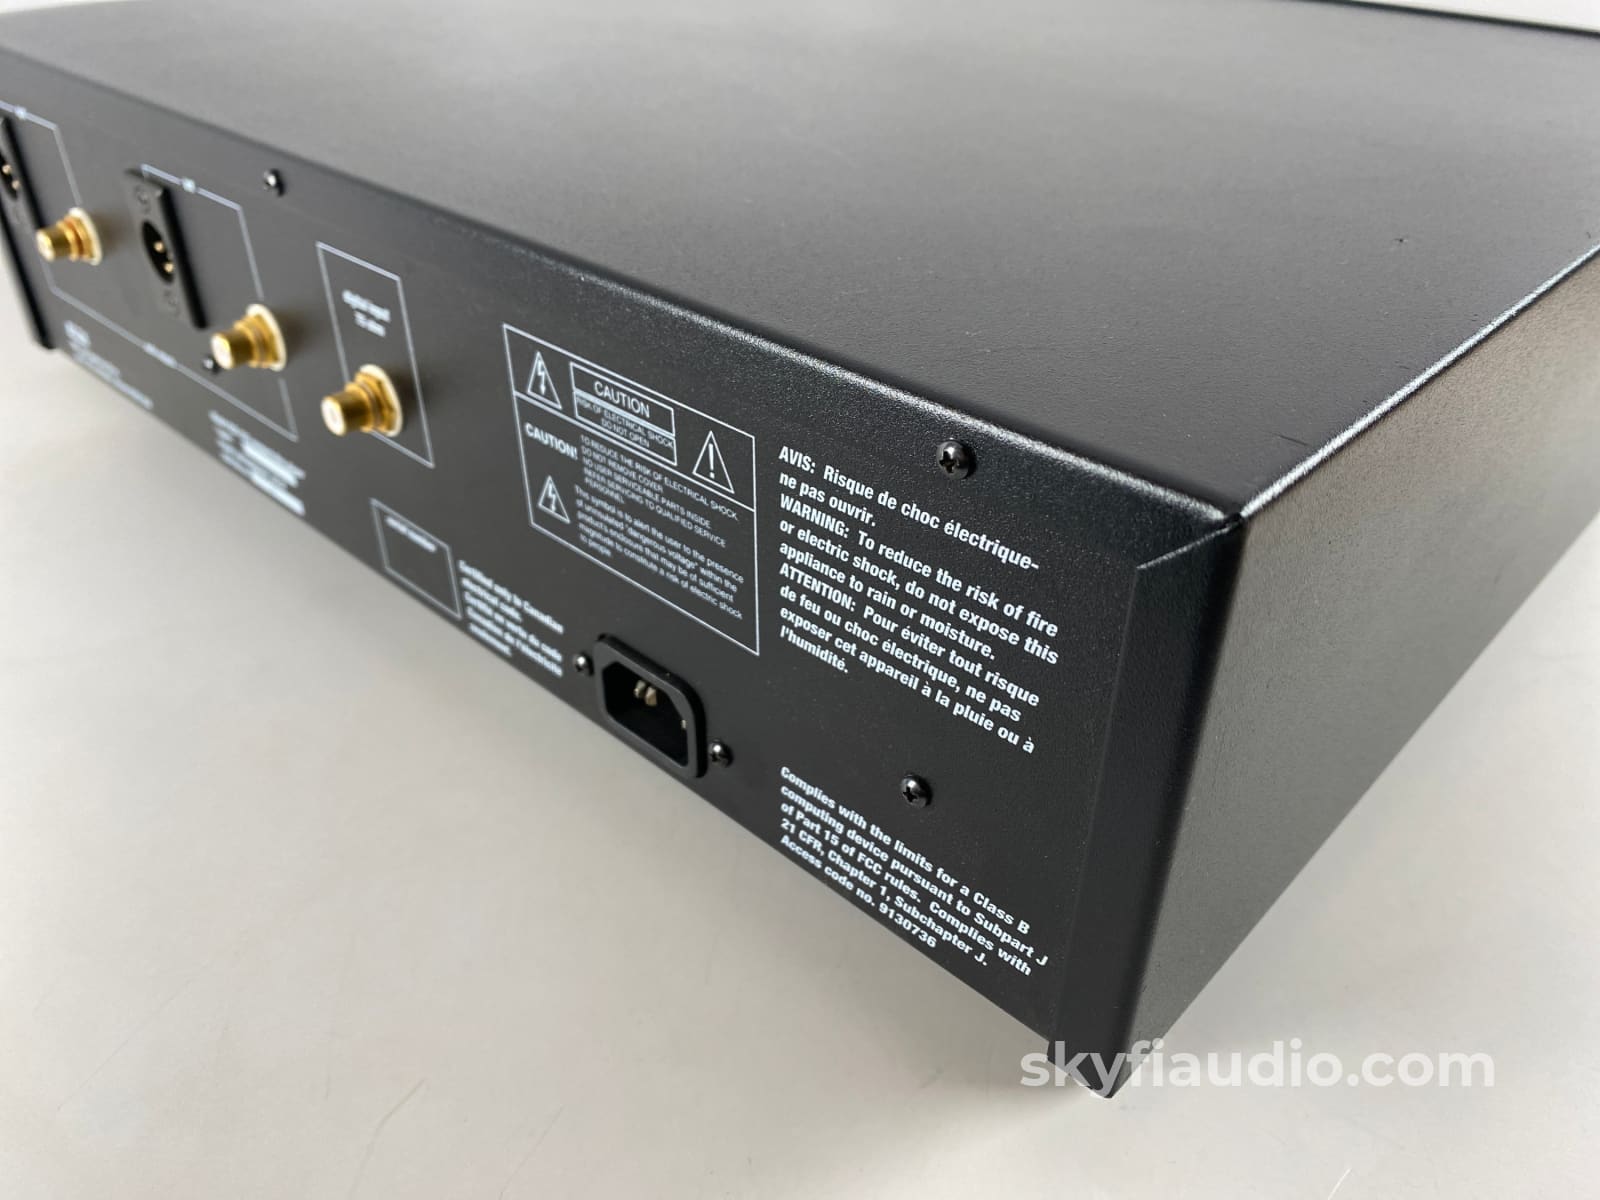 Adcom Gcd-750 Hdcd Cd Player And Outboard System Dac + Digital